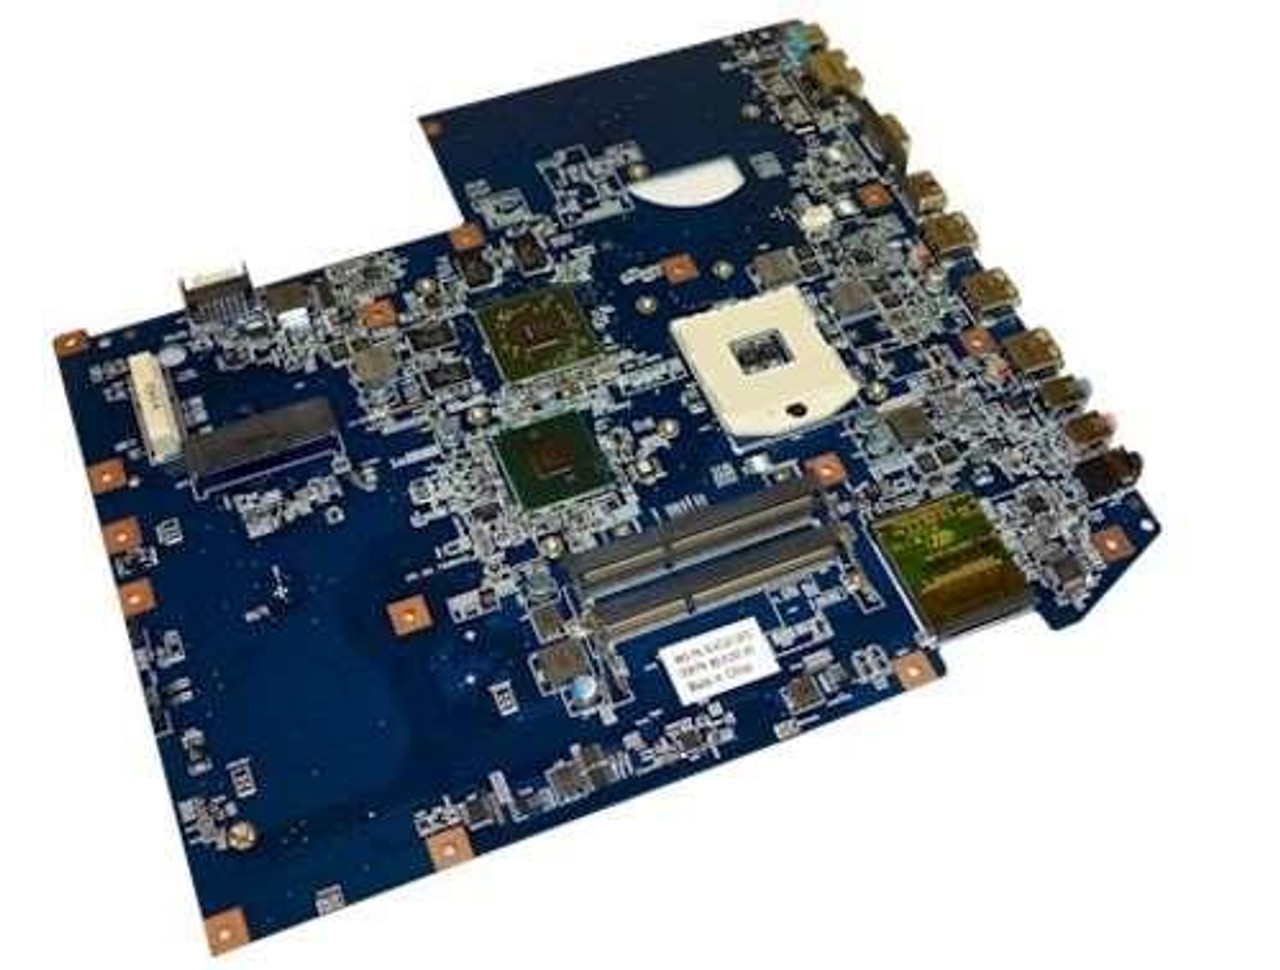 MB.PLX01.001 Acer System Board (Motherboard) for Aspire 7740G Notebook (Refurbished)